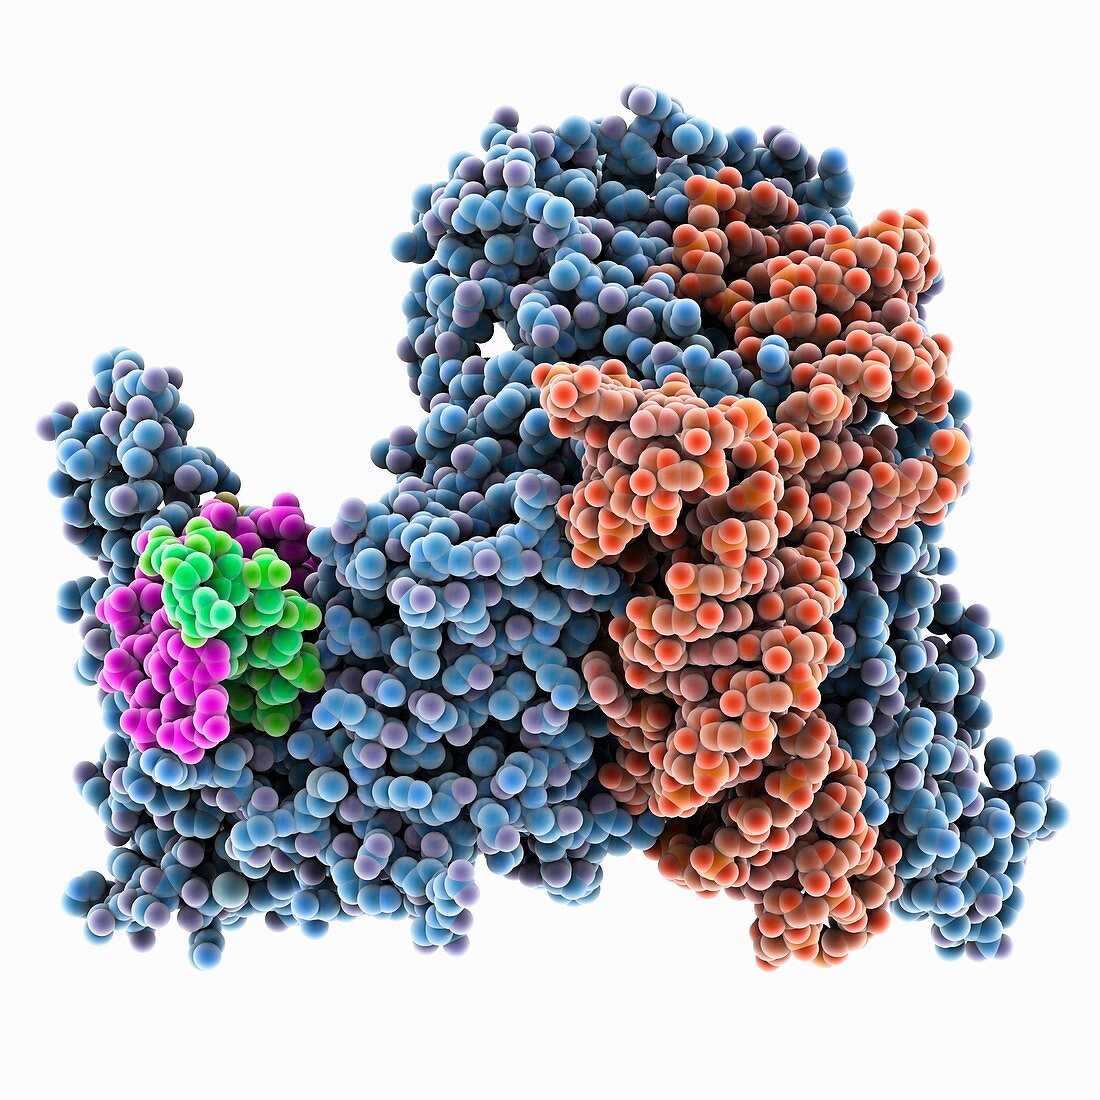 CRISPR-associated protein complex, molecular model